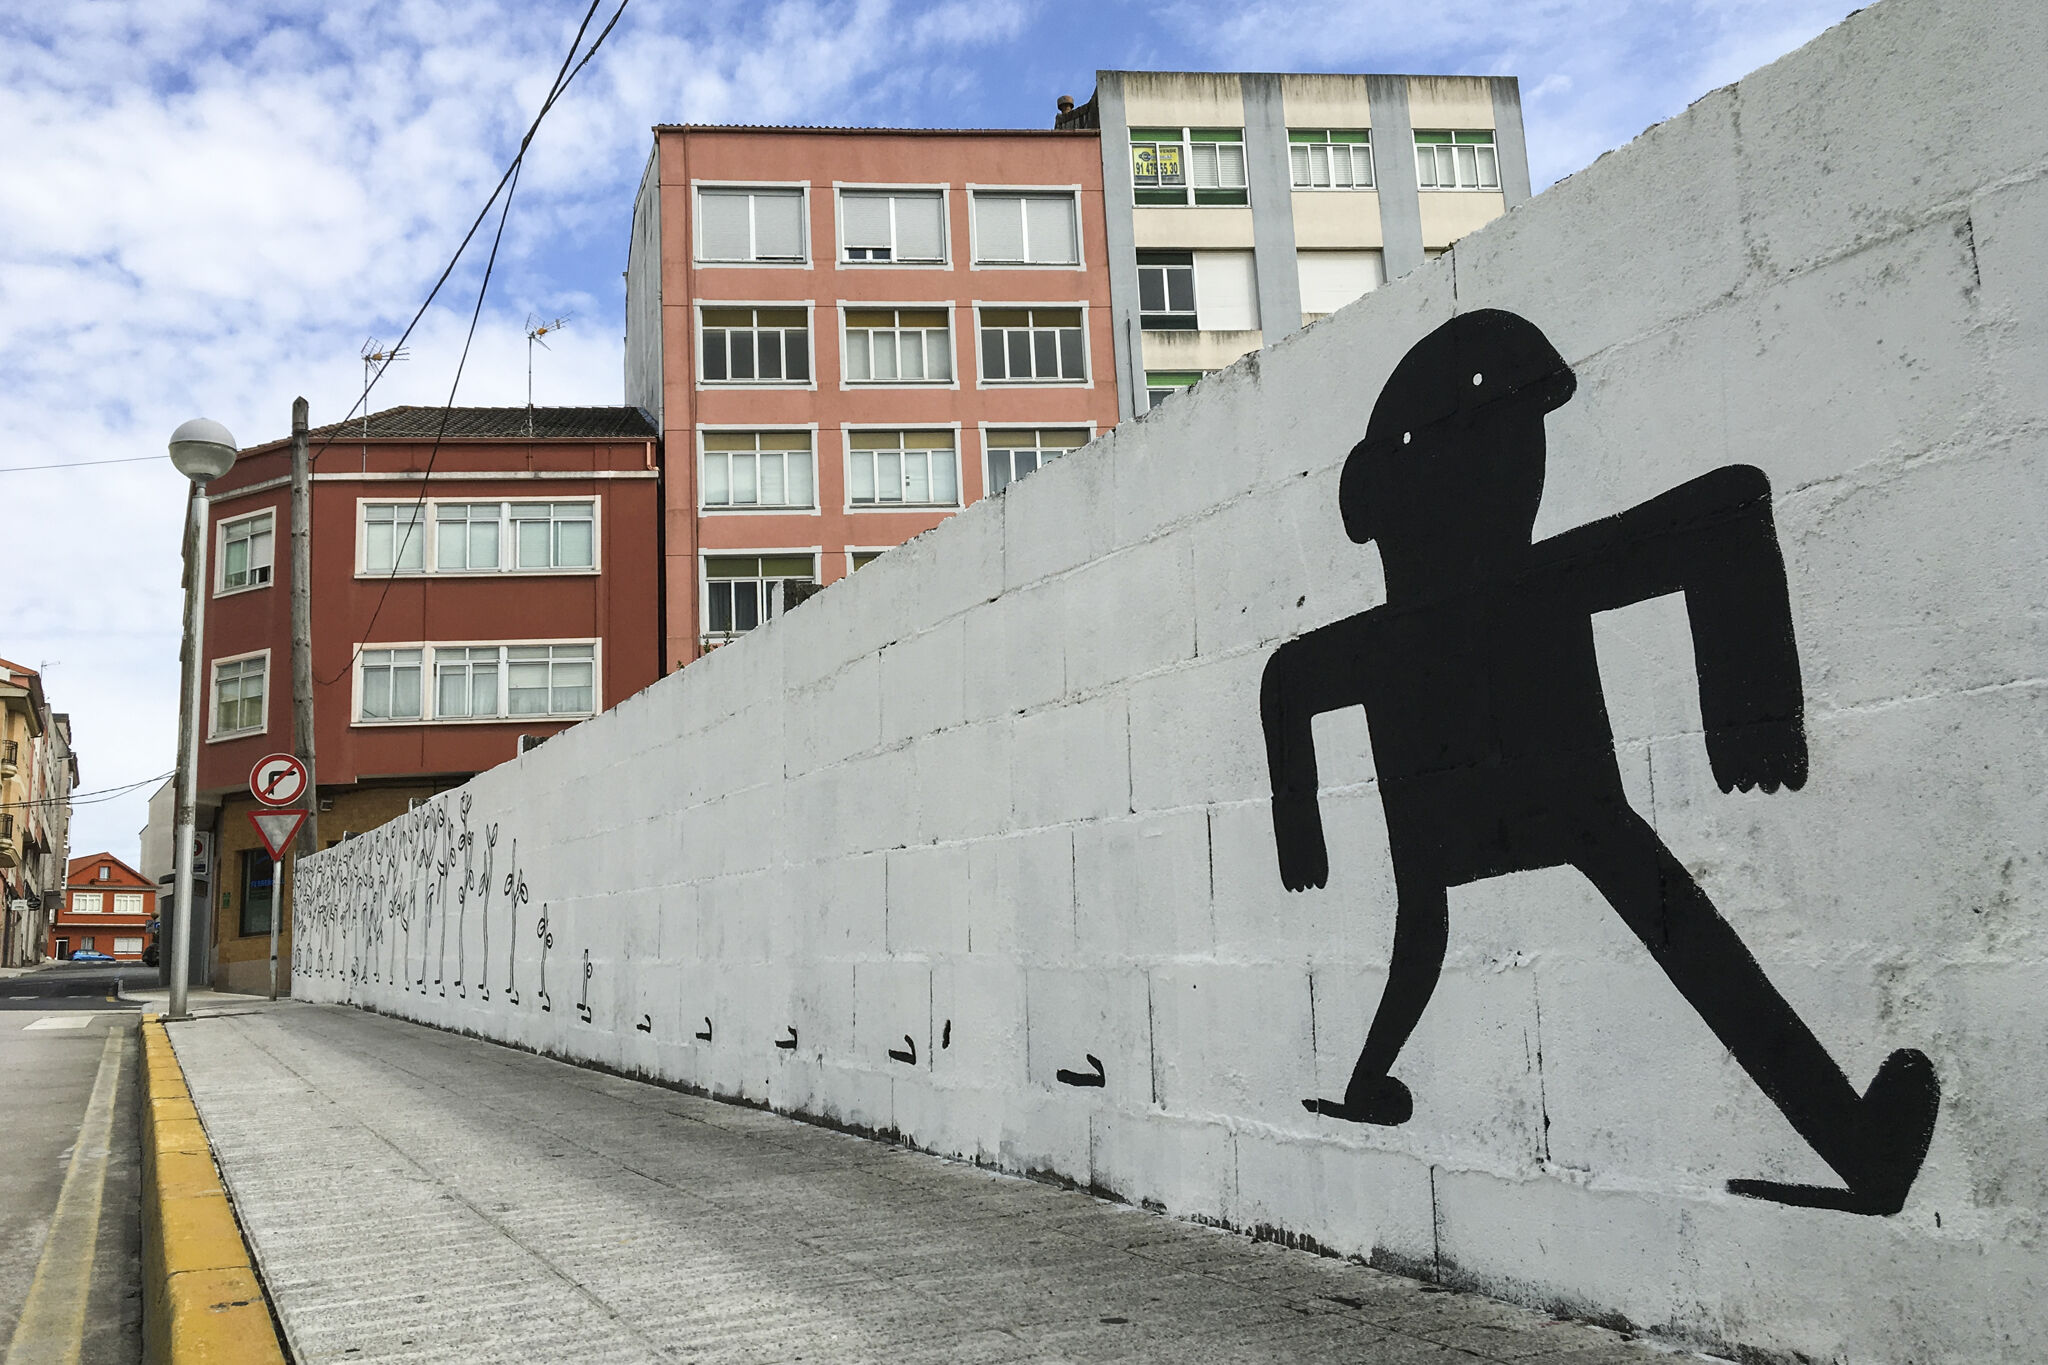 Leandro Barea&mdash;Wall by LEANDRO BAREA for DESORDES CREATIVAS 2019 in Ordes (Galicia-Spain)